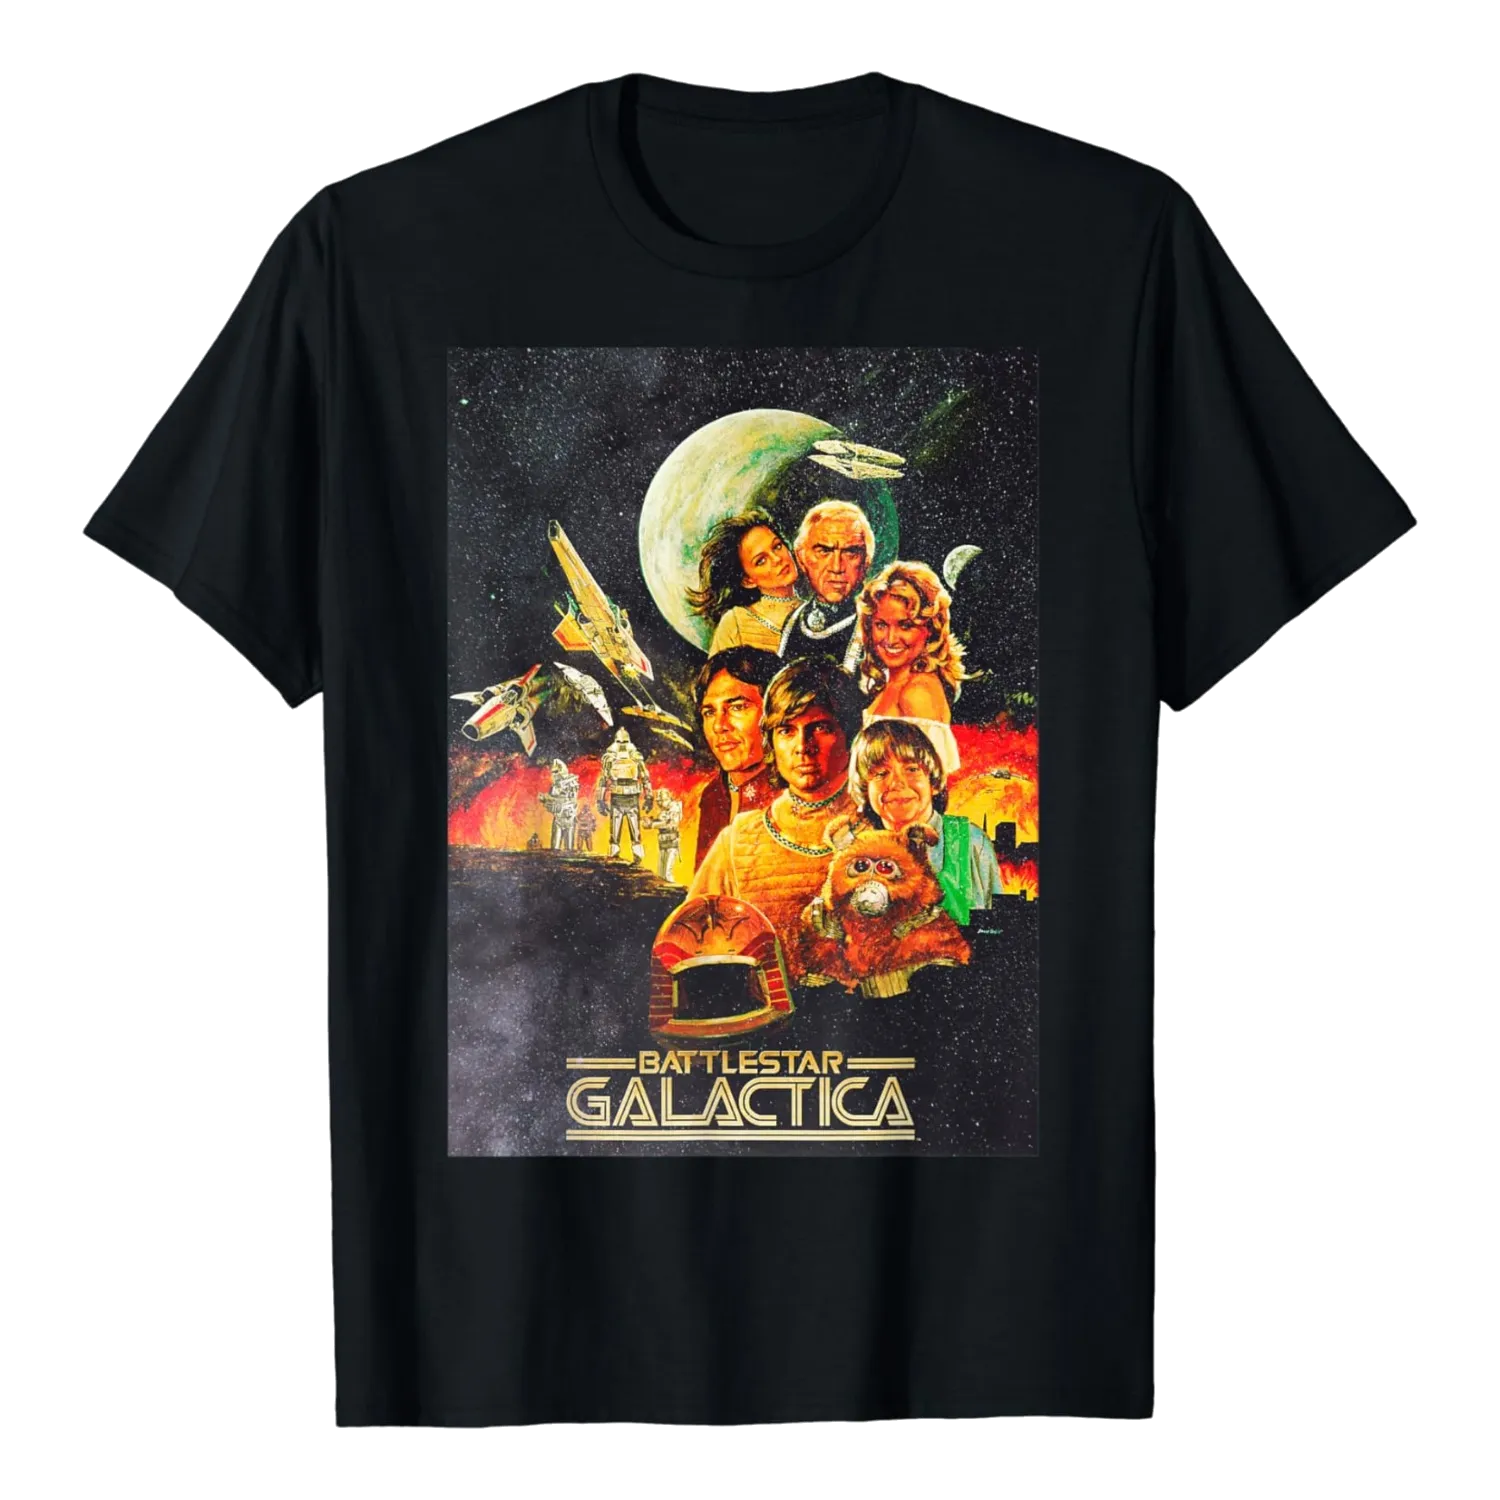 Camiseta vintage de Battlestar Galactica